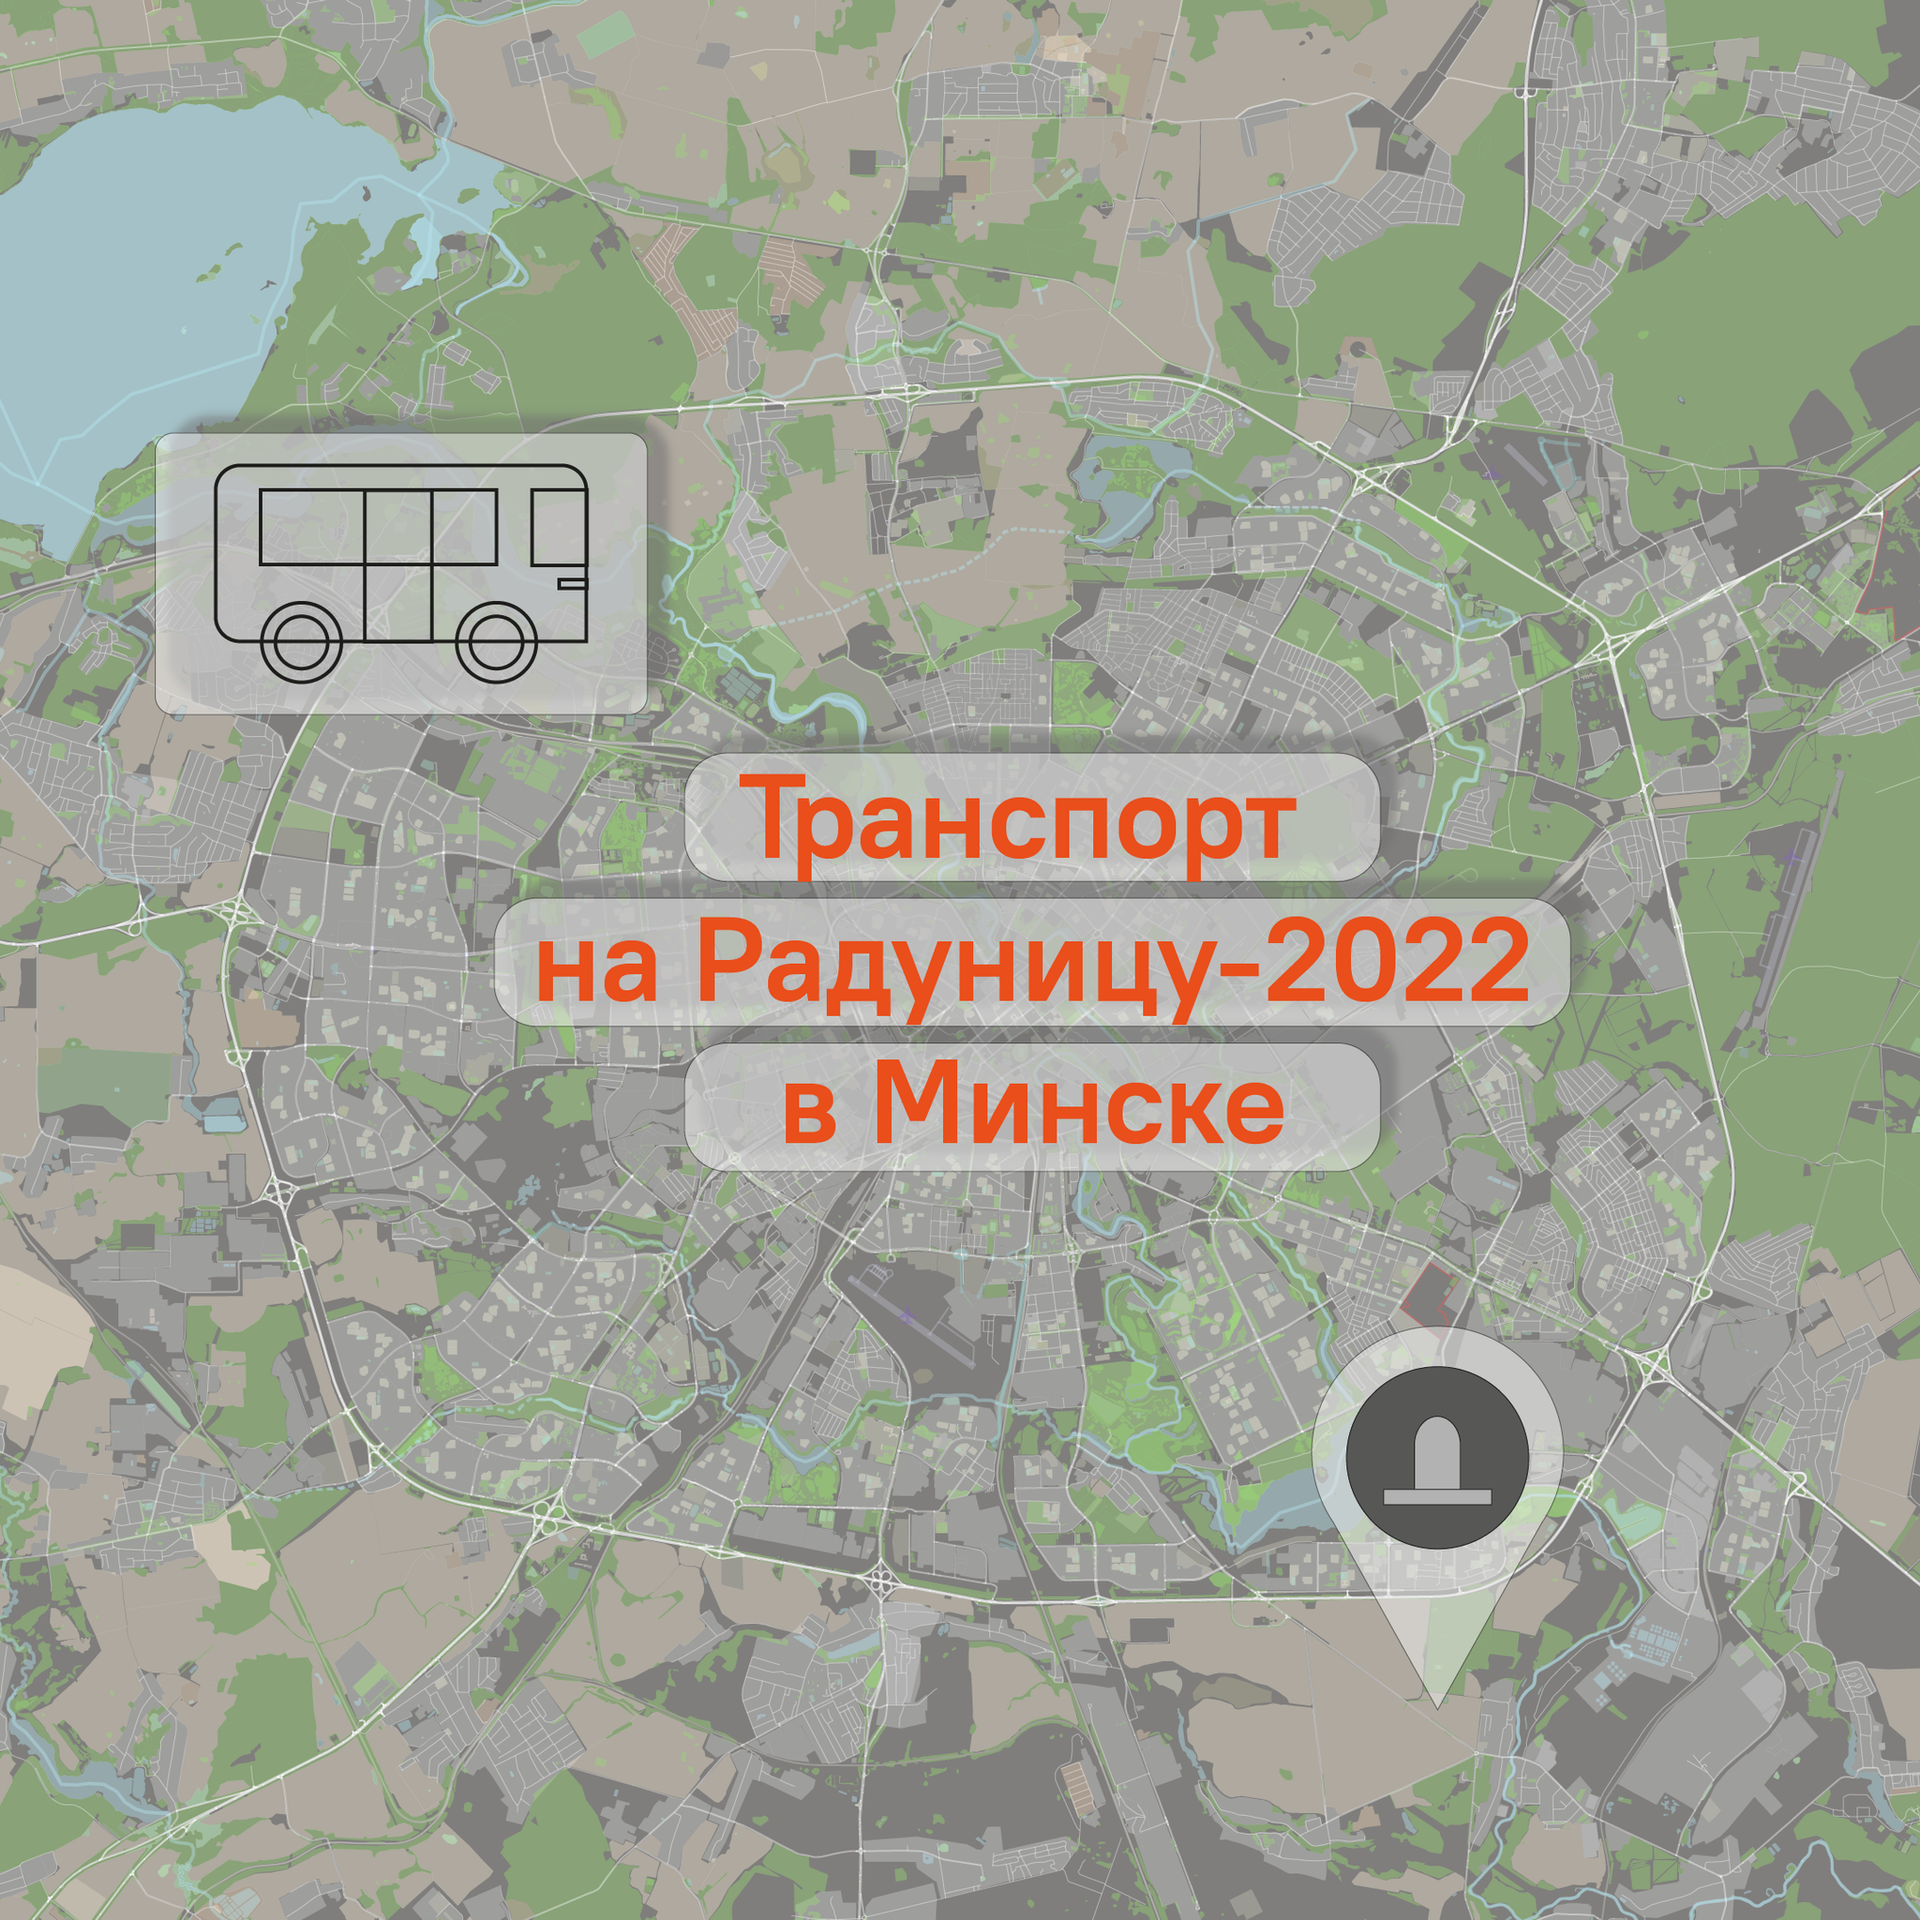 Православная радуница в 2024 году беларуси